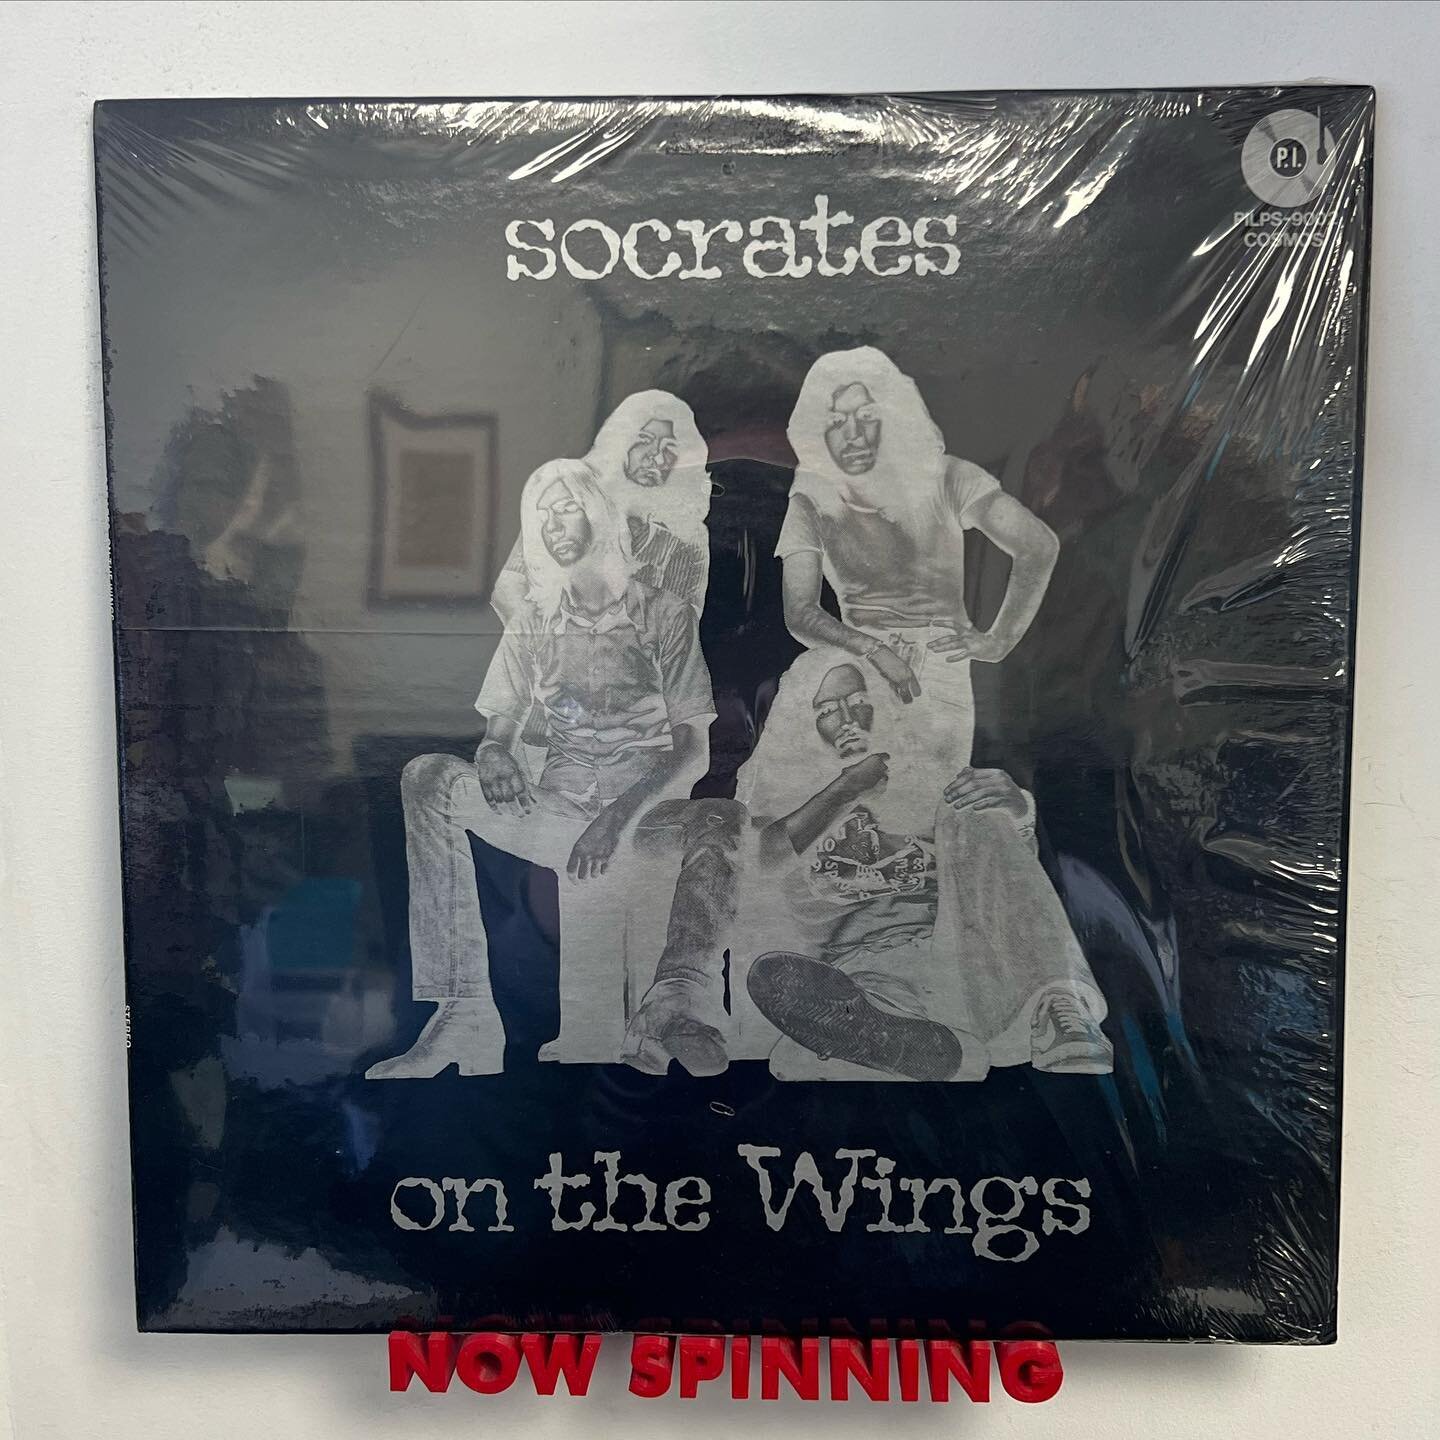 Socrates Drank The Conium - On the Wings (P.I. Records, US 1973) 🇬🇷 
.
.
.
.
Hi Fi Dream Machine Fi Dream Machine w dj Smokin Joe
TUNE IN every FRIDAY 
streaming 👇🏼📻✨
www.hfdmradio.com
8pm EST
7pm EST
5pm PST
.
.
.
LINK IN BIO!!! 💣💥 
.
.
.
#hi